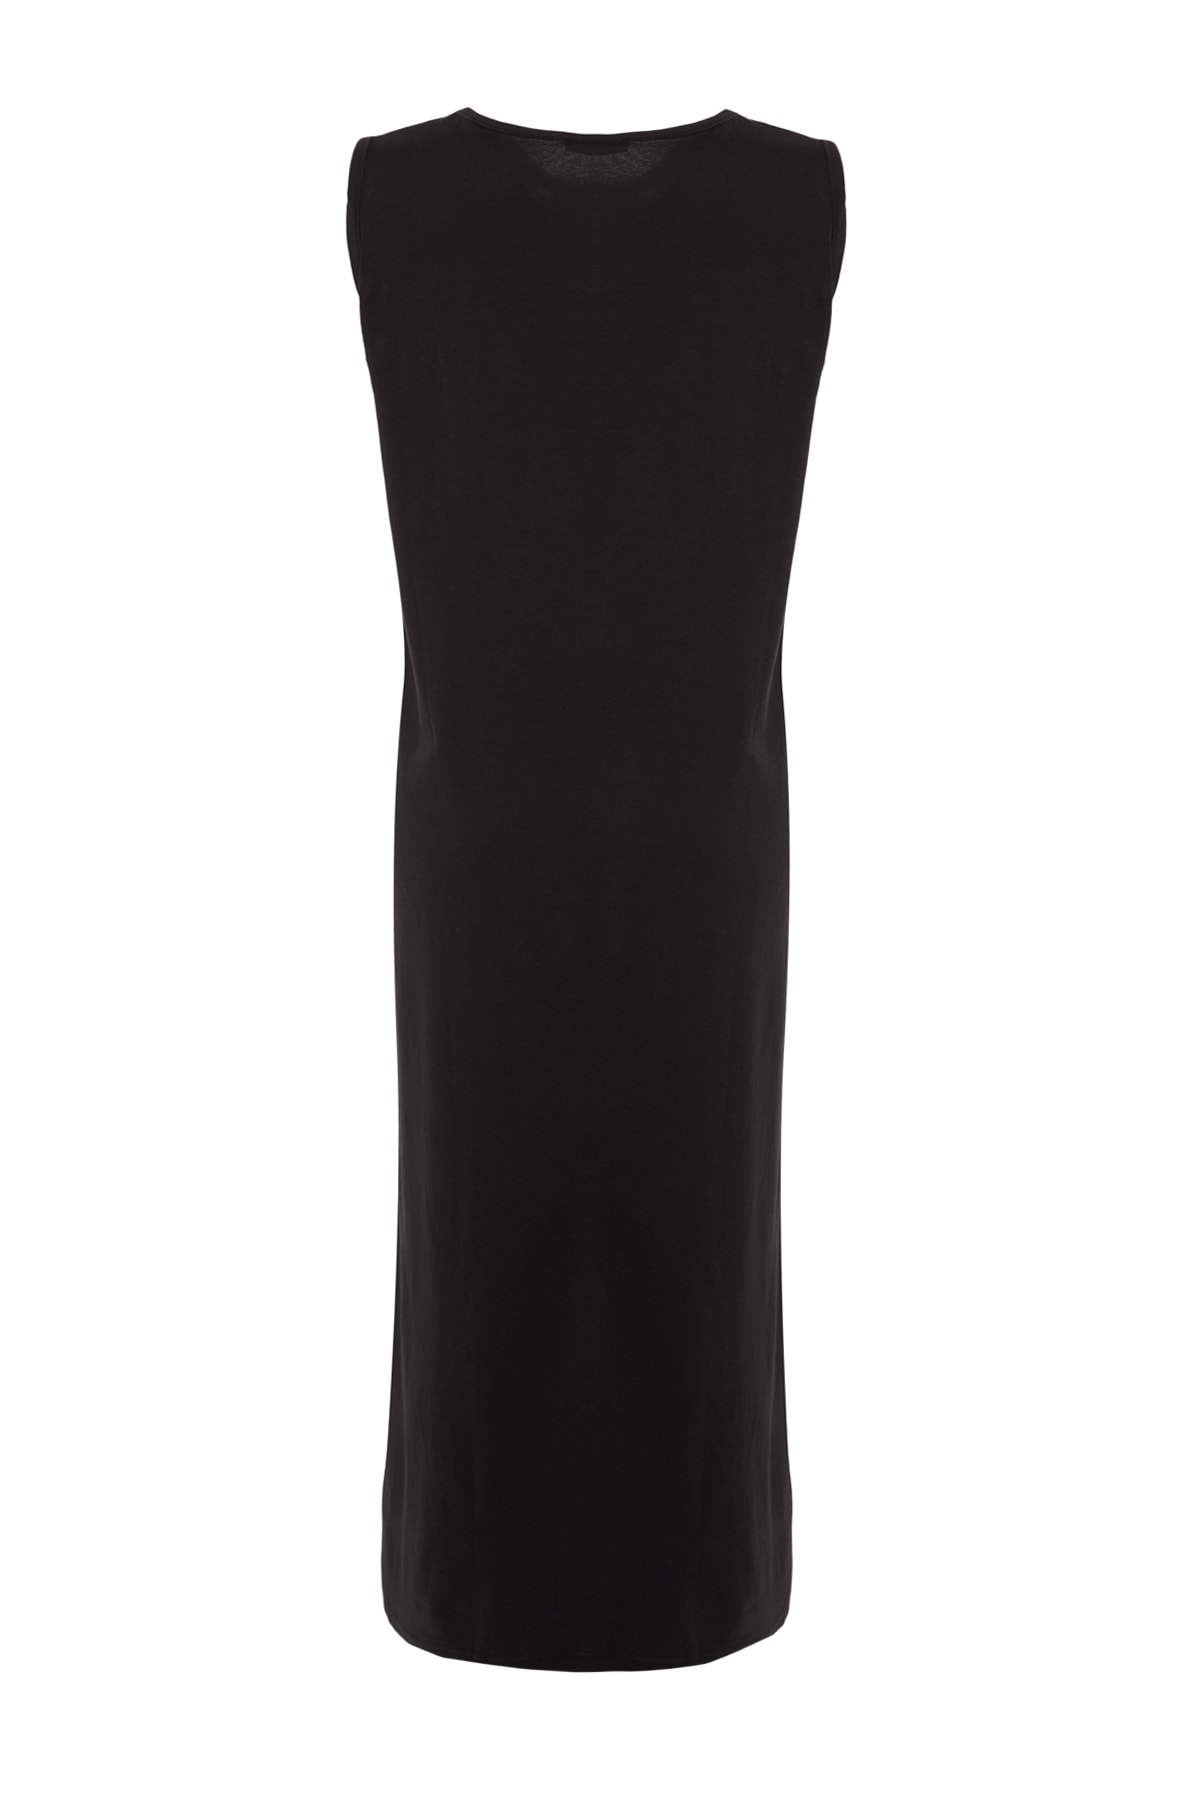 Siyah Kolsuz Elbise Astarı-İçlik TCTSS21UK0034